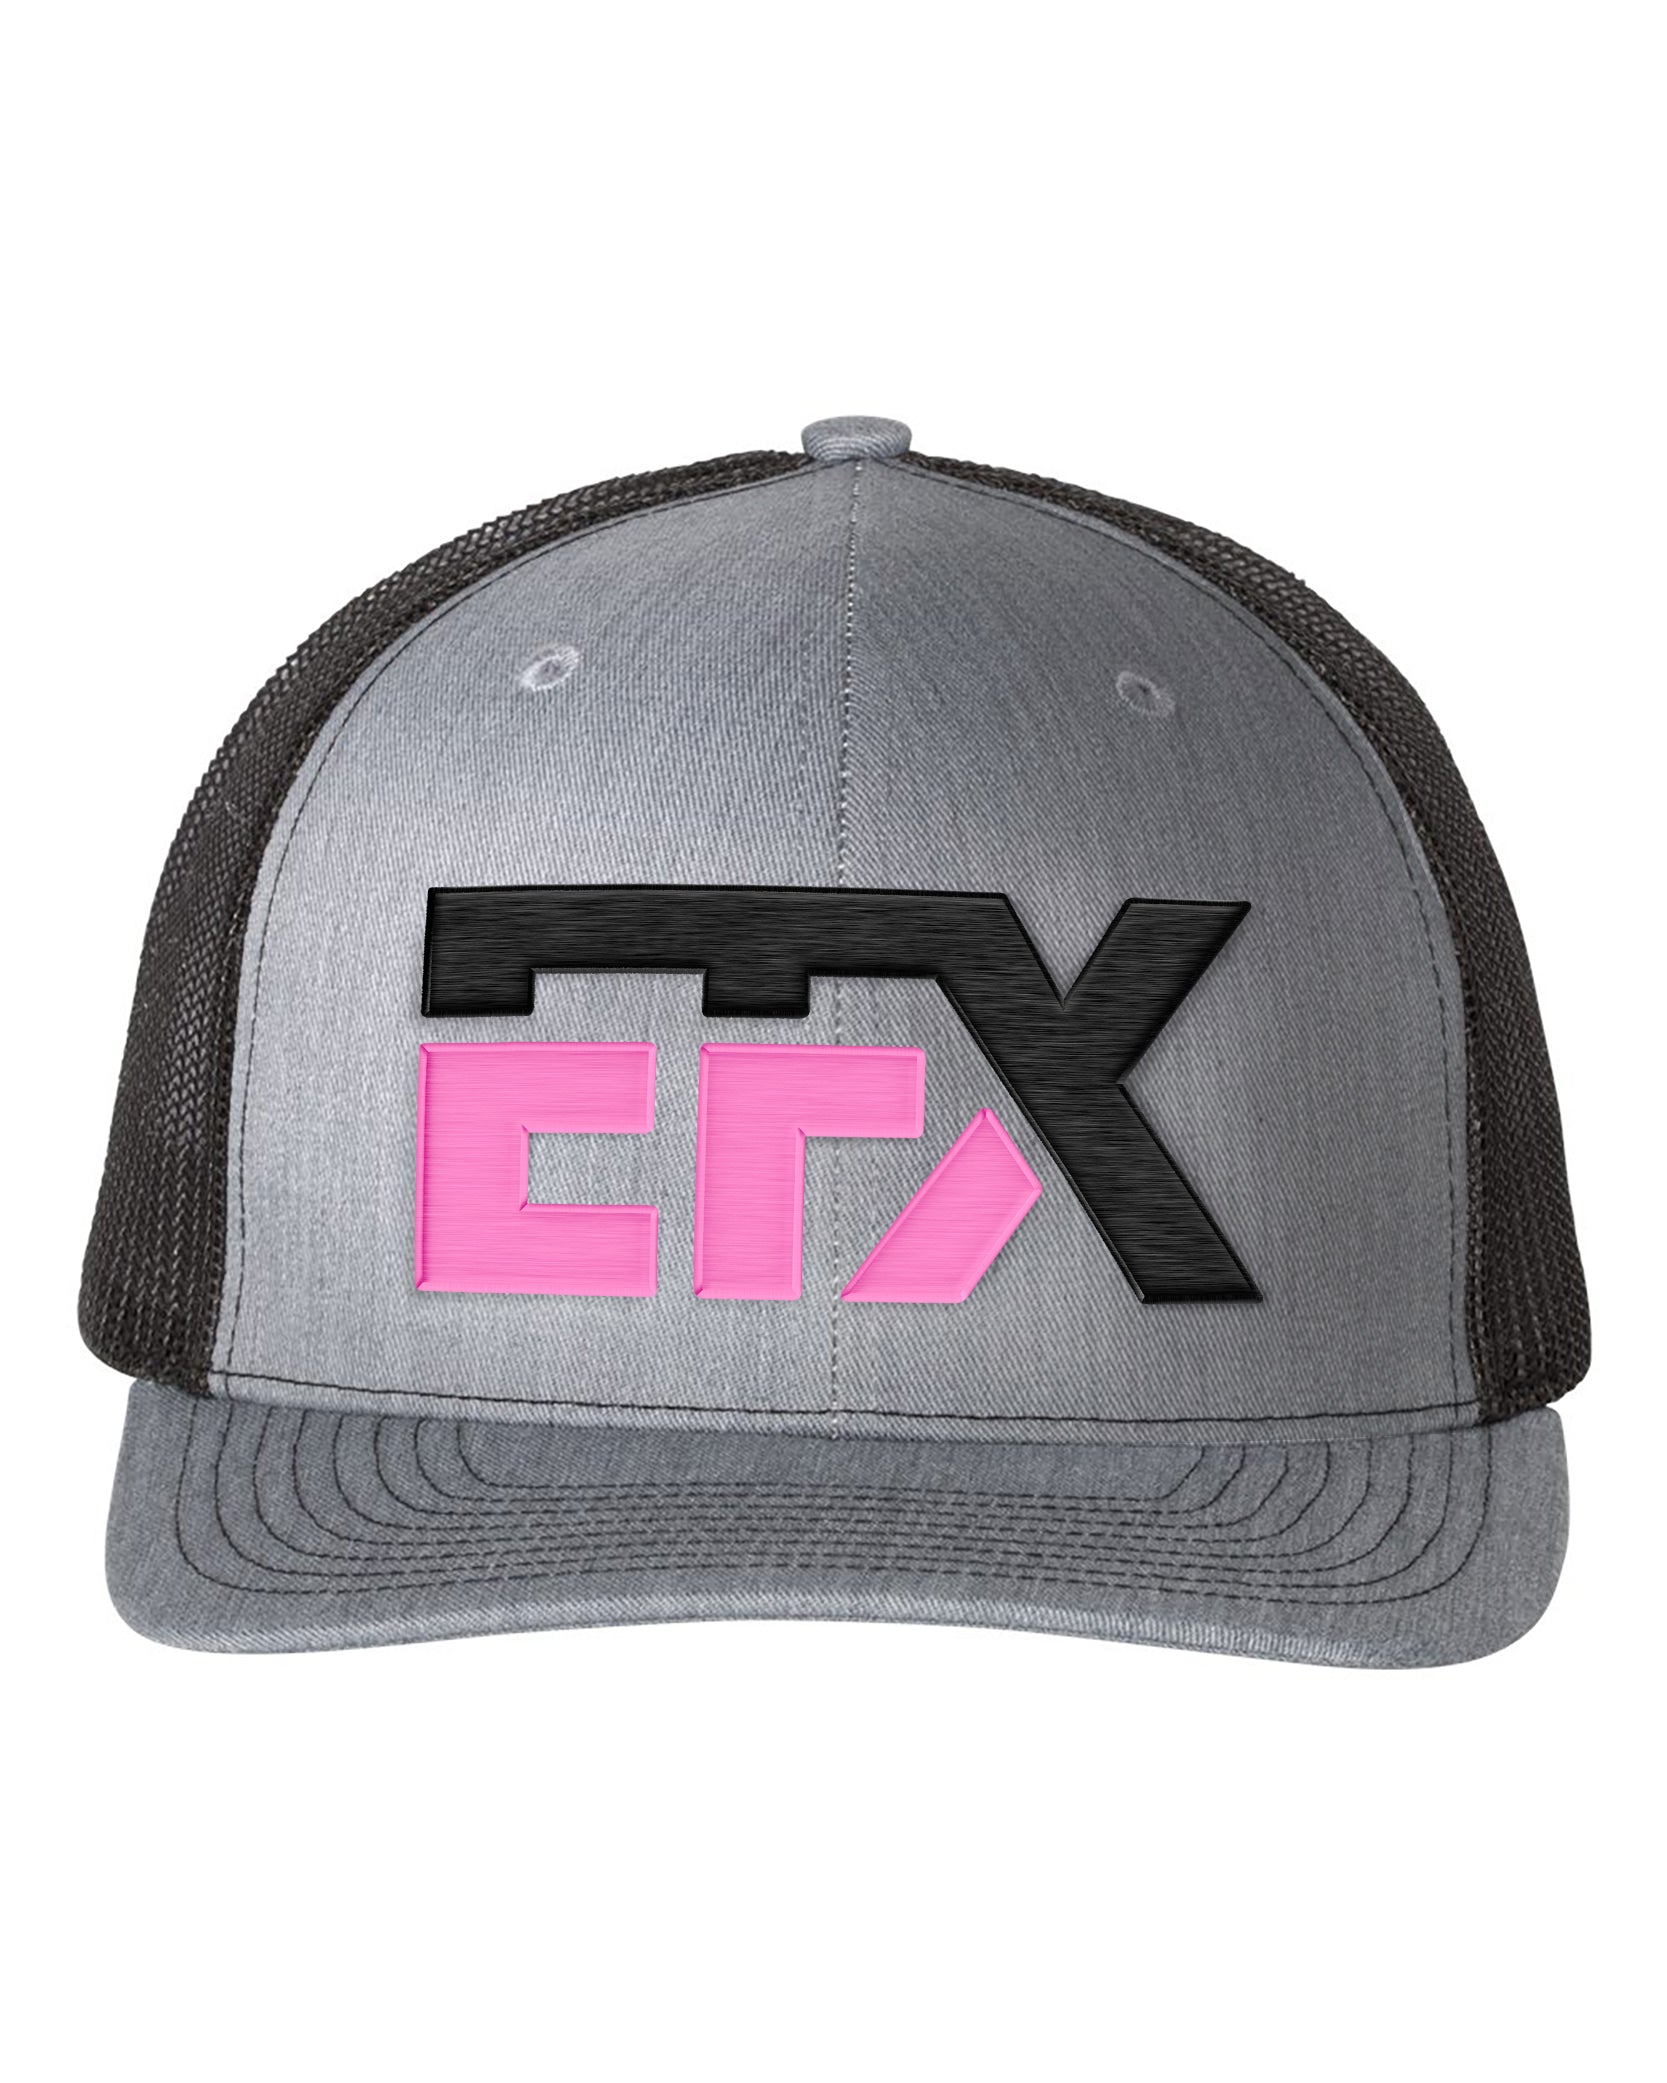 Logo-Short-Black & Pink on Black & Gray Hat